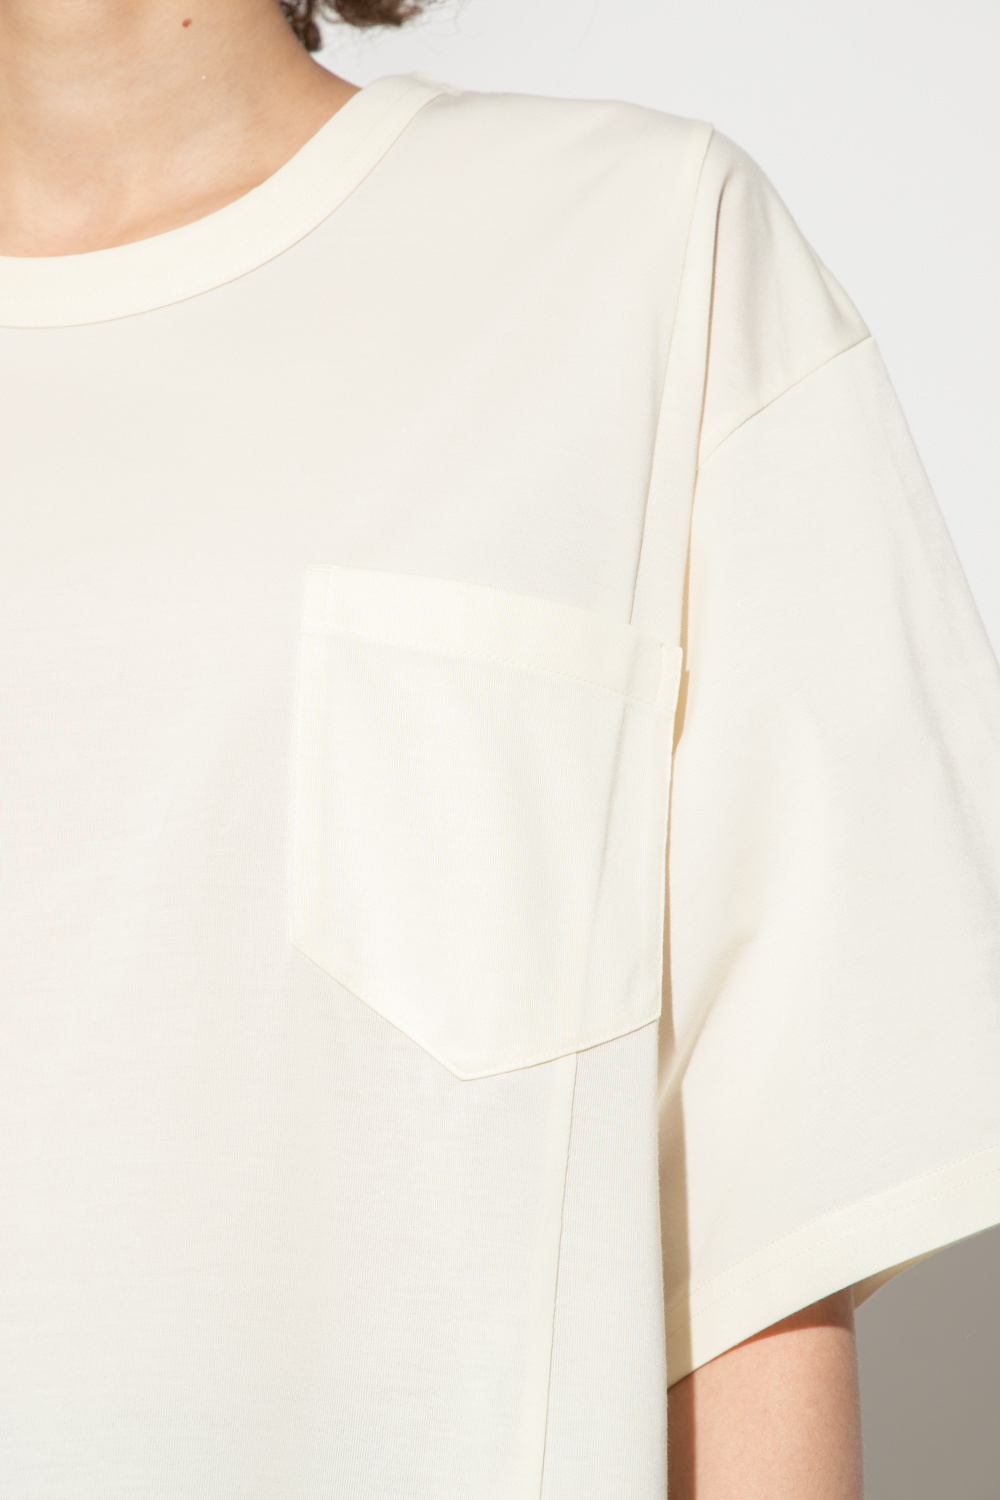 Cream Asymmetrical shirt Y-3 Yohji Yamamoto - Vitkac Italy